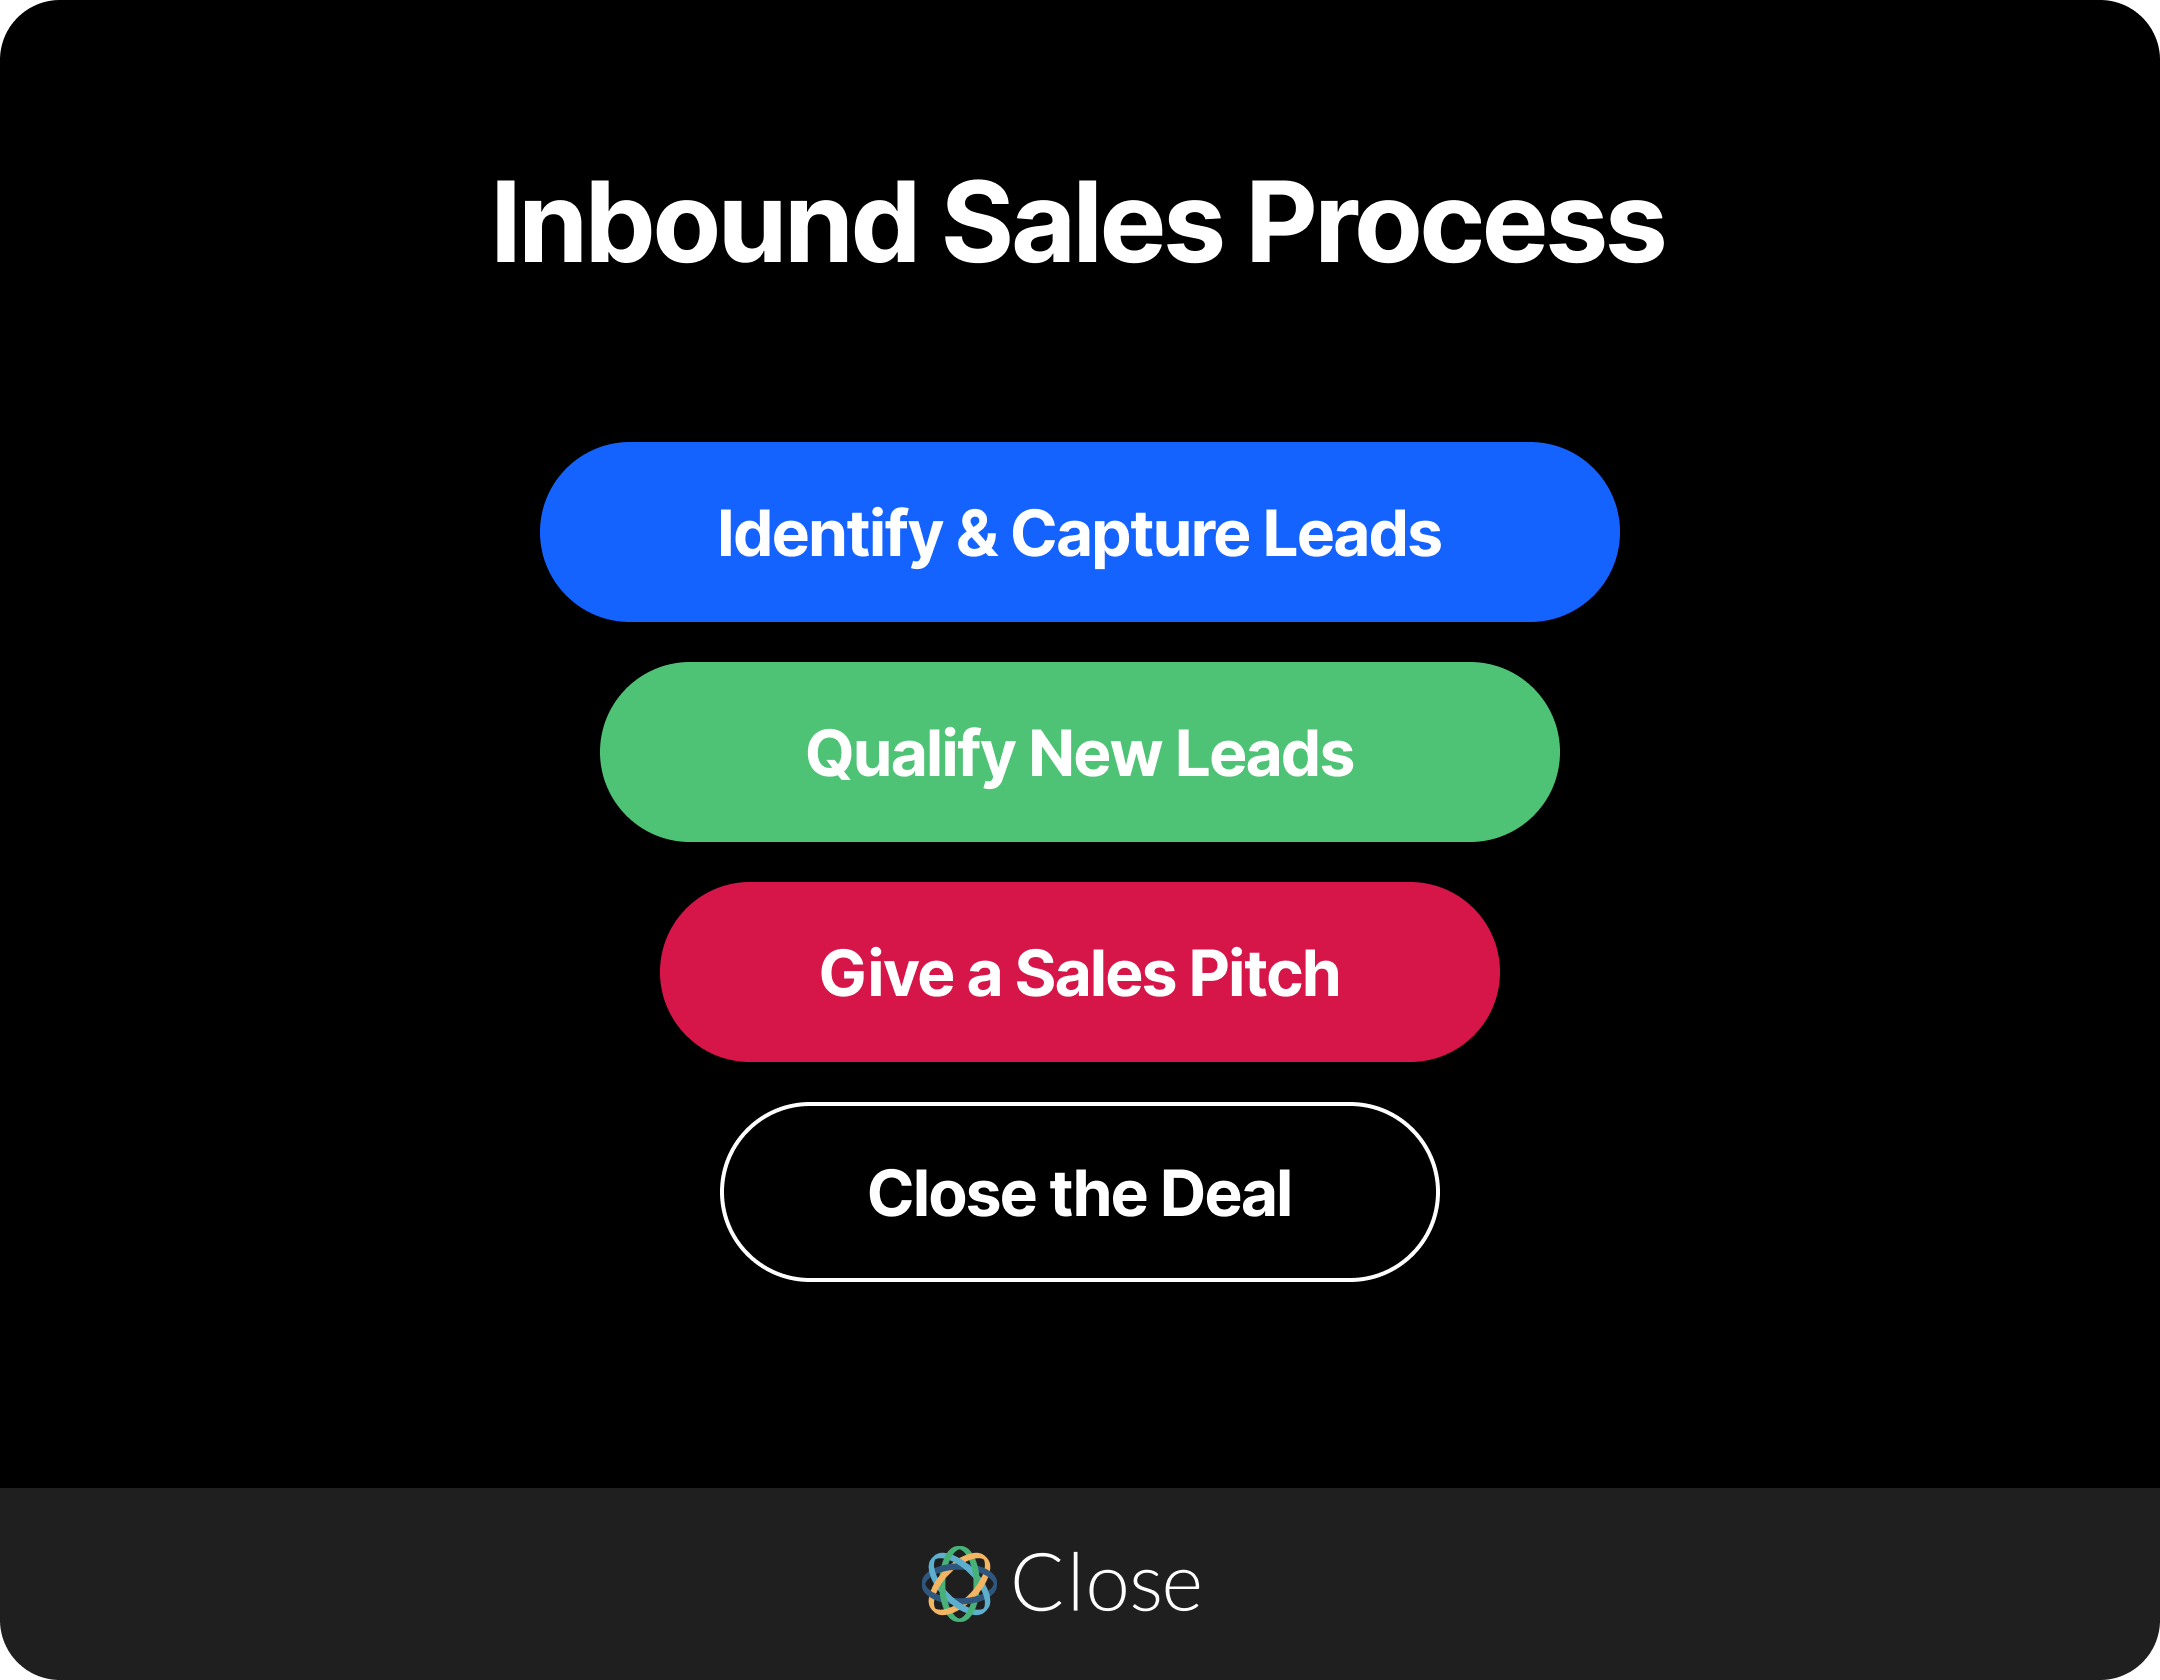 Inbound sales process